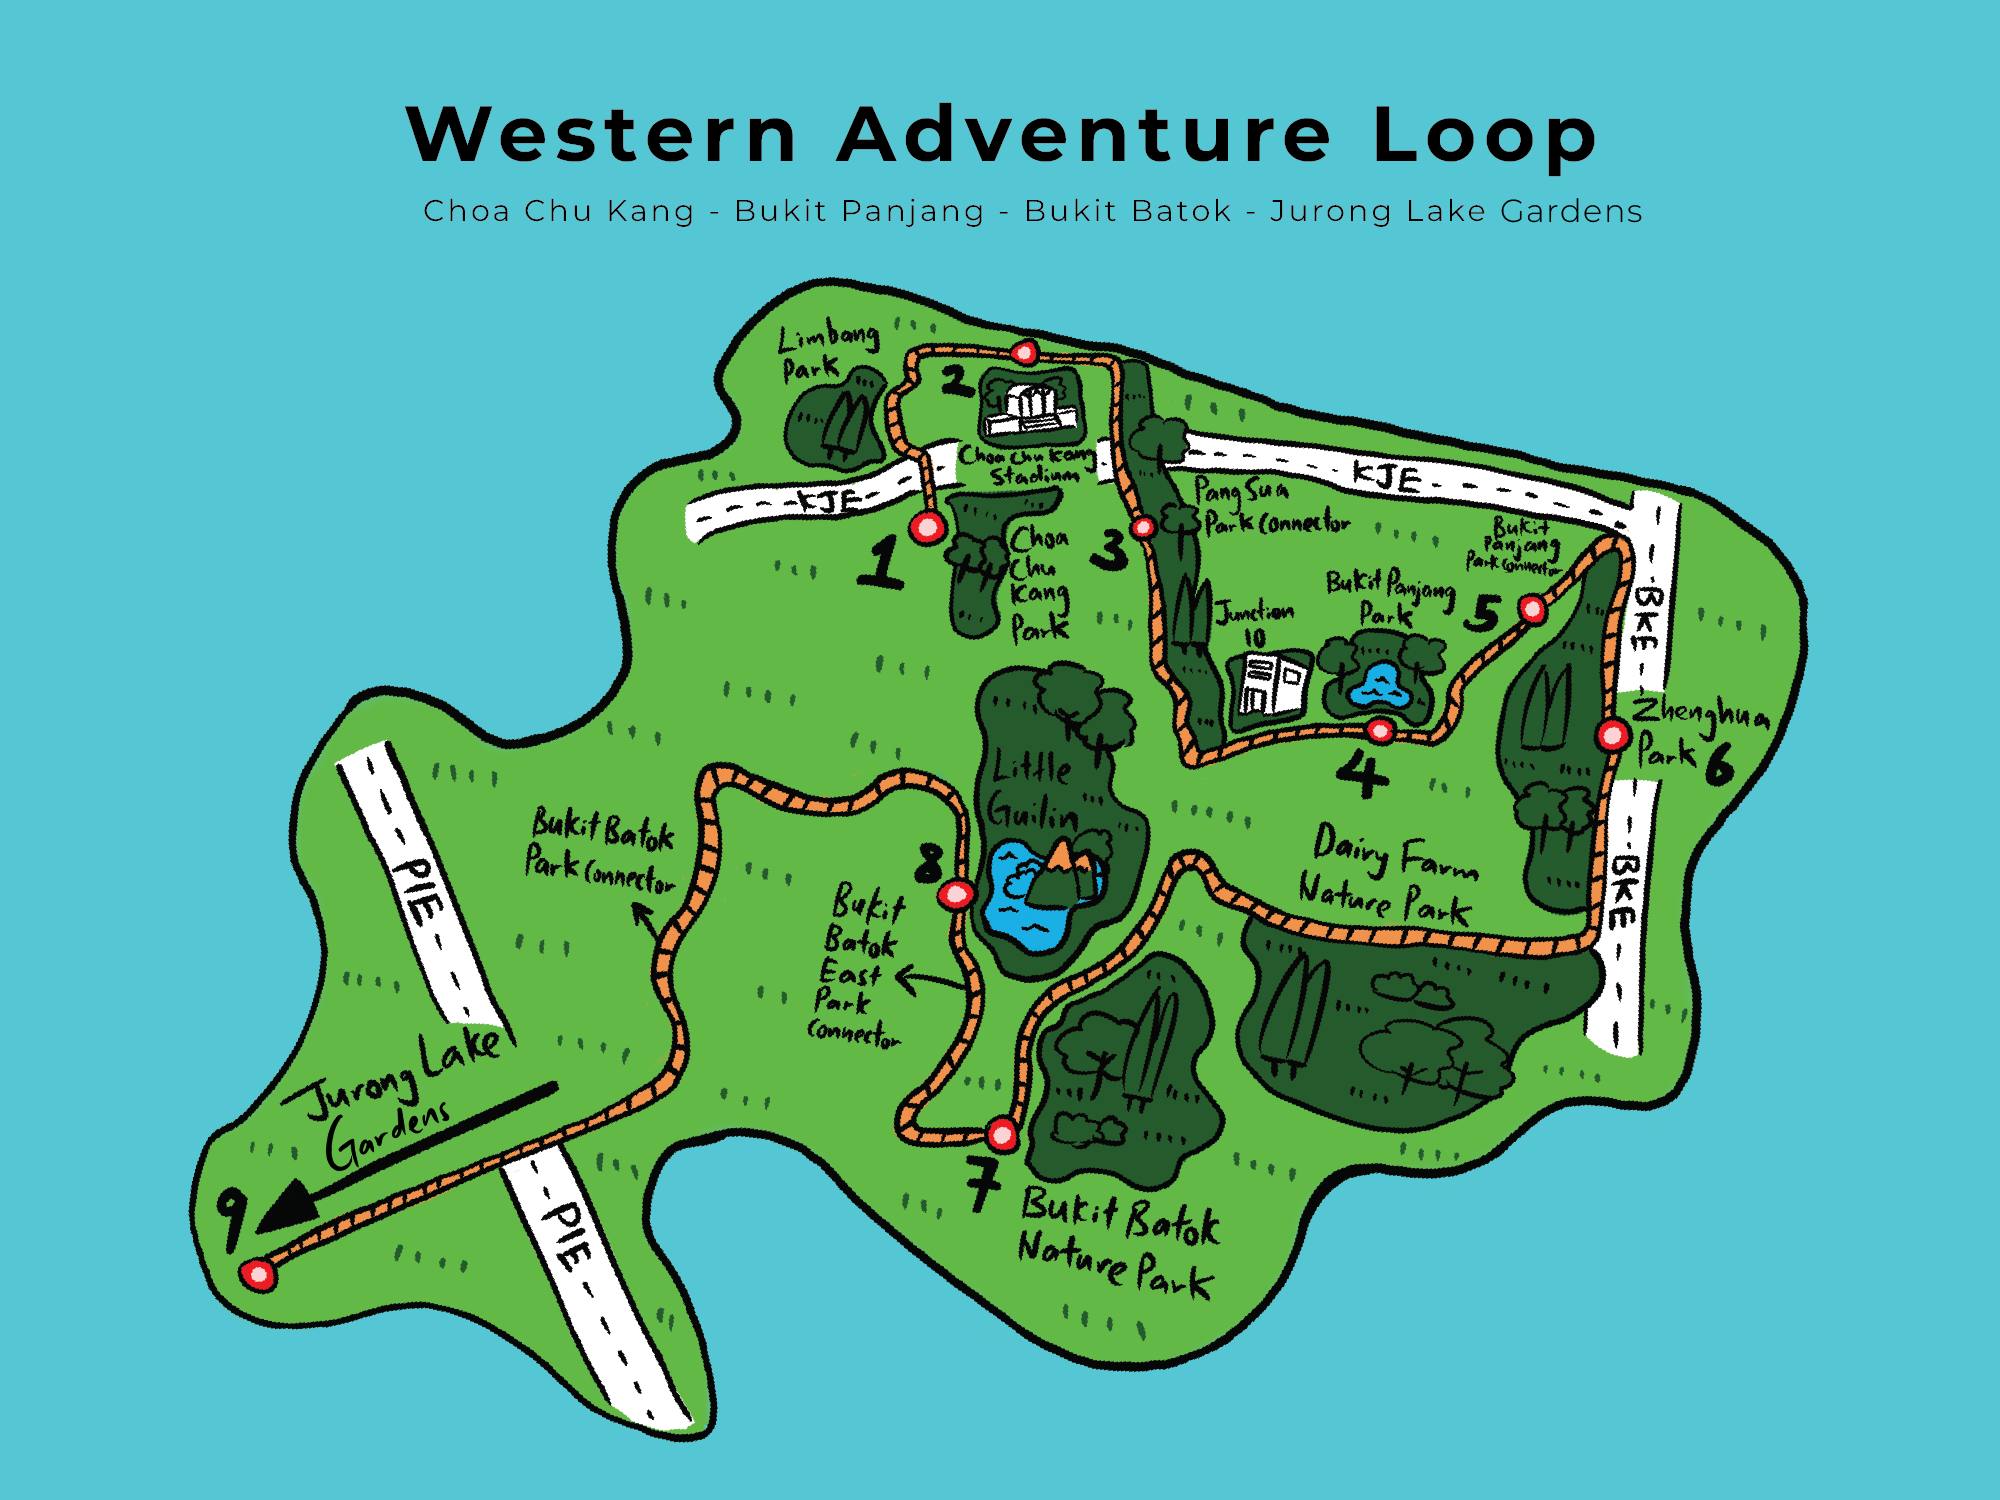 Western Adventure Loop around The Myst